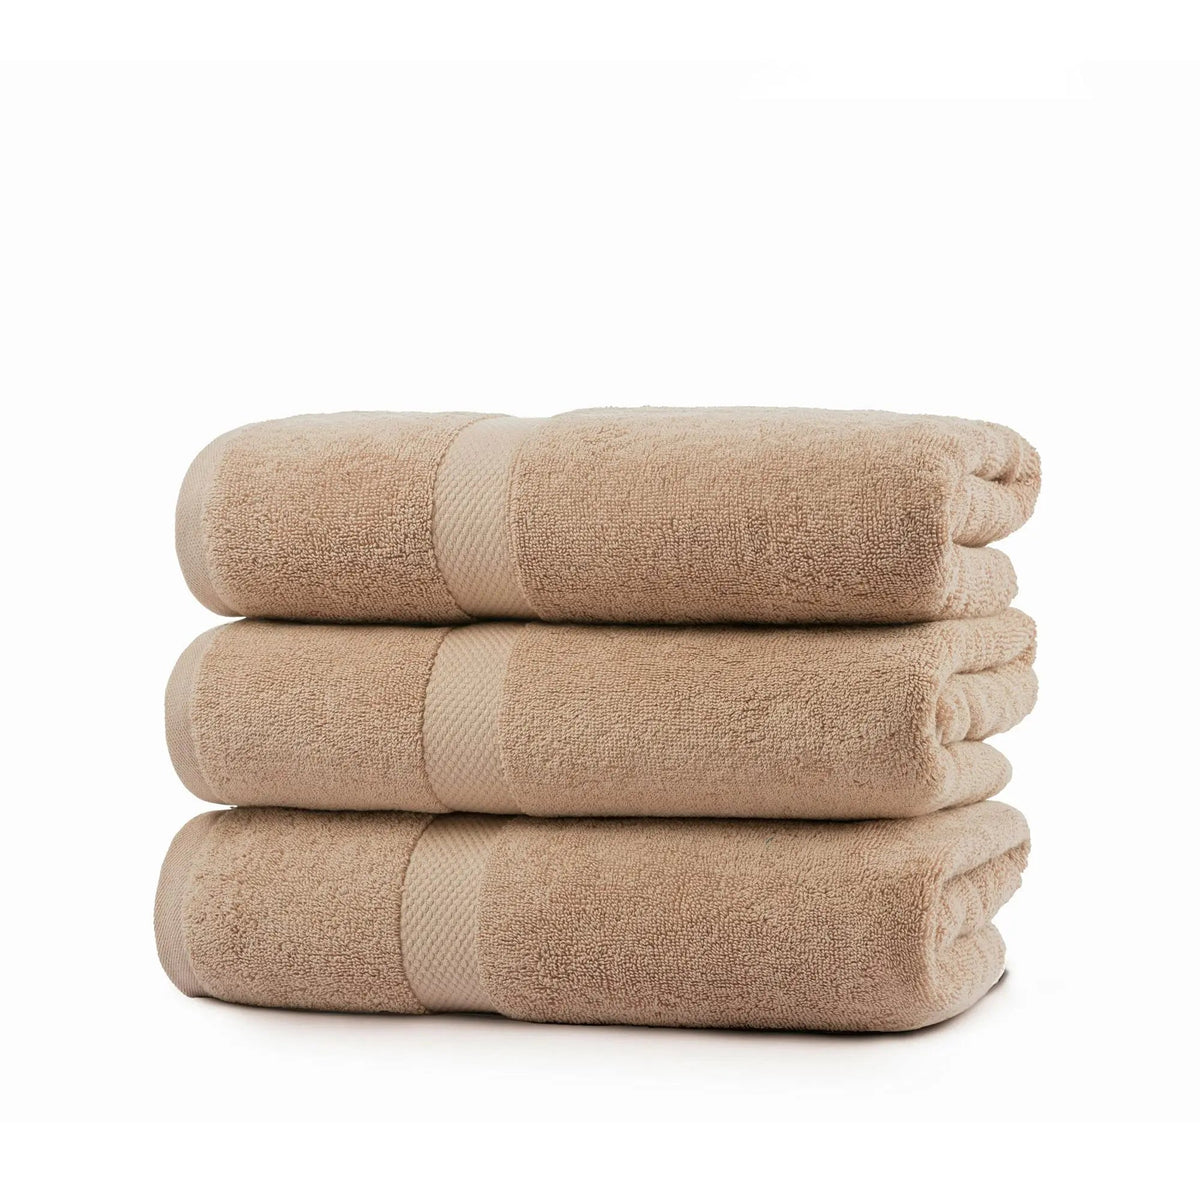 Misty Calm Organic Cotton Bath Towel | Hypoallergenic - Allergy Friendly - Naturally Free